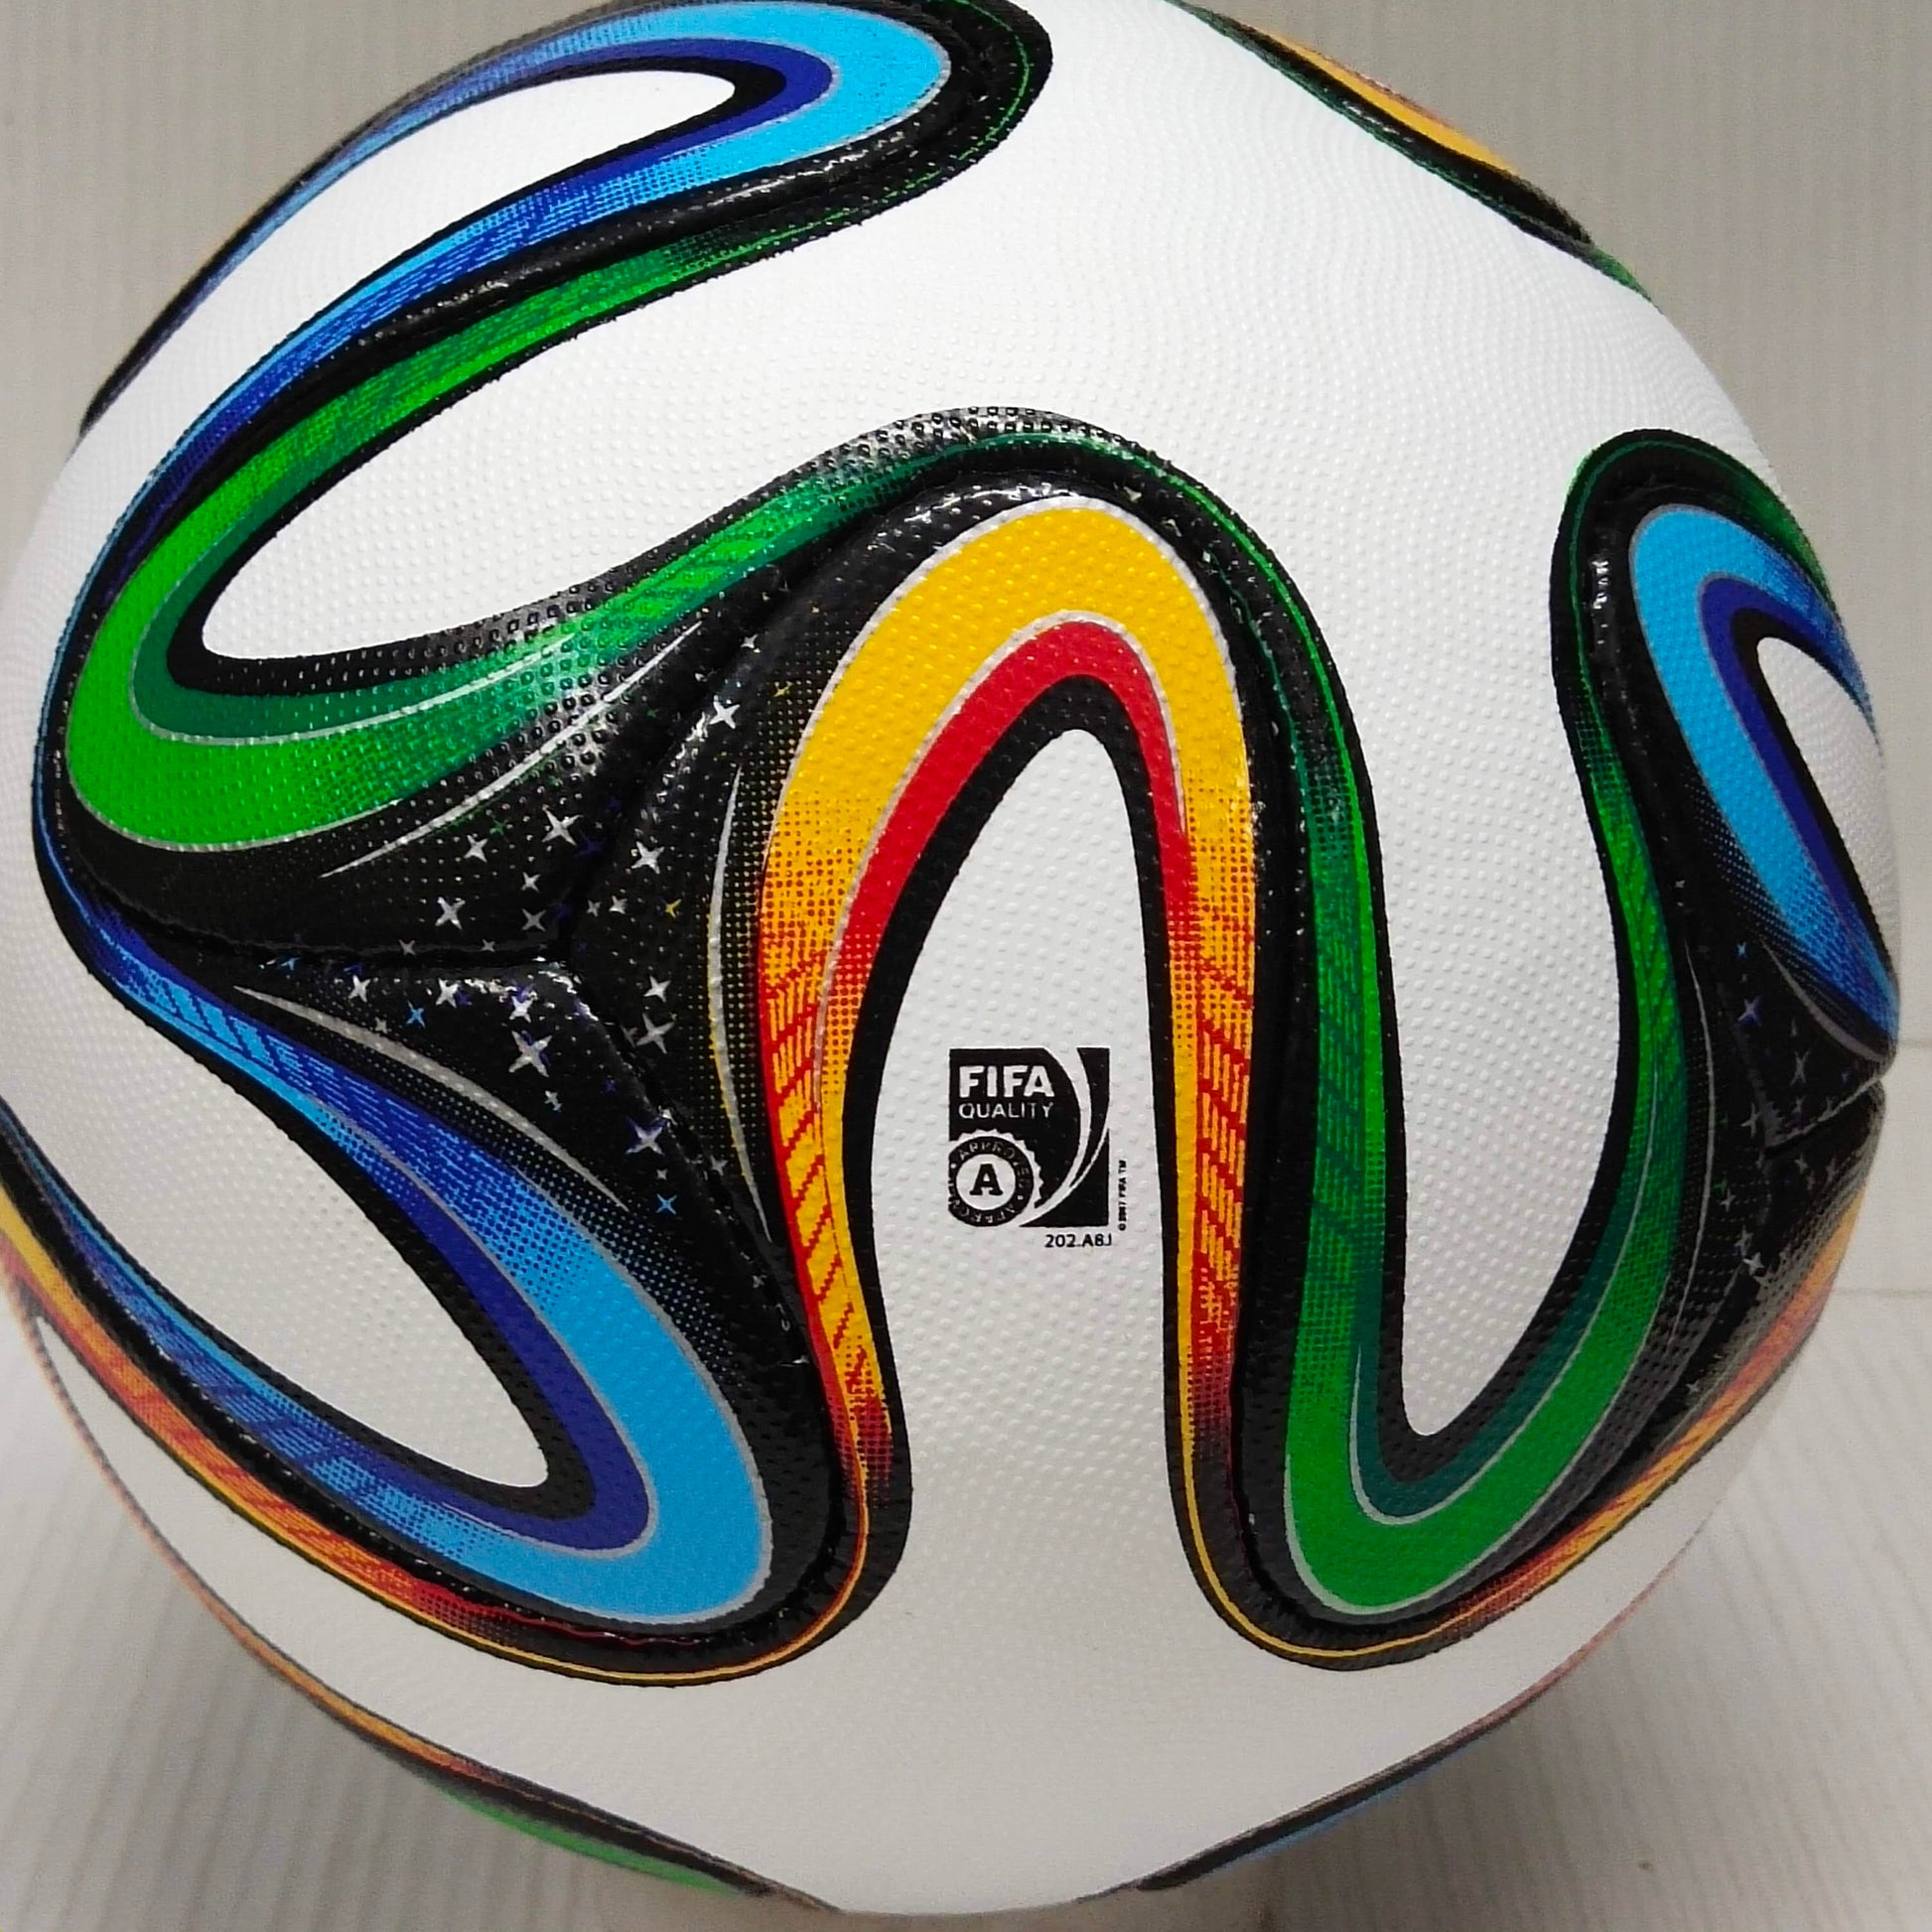 Adidas Brazuca | Match Ball | 2014 | FIFA World Cup Ball | SIZE 5 07